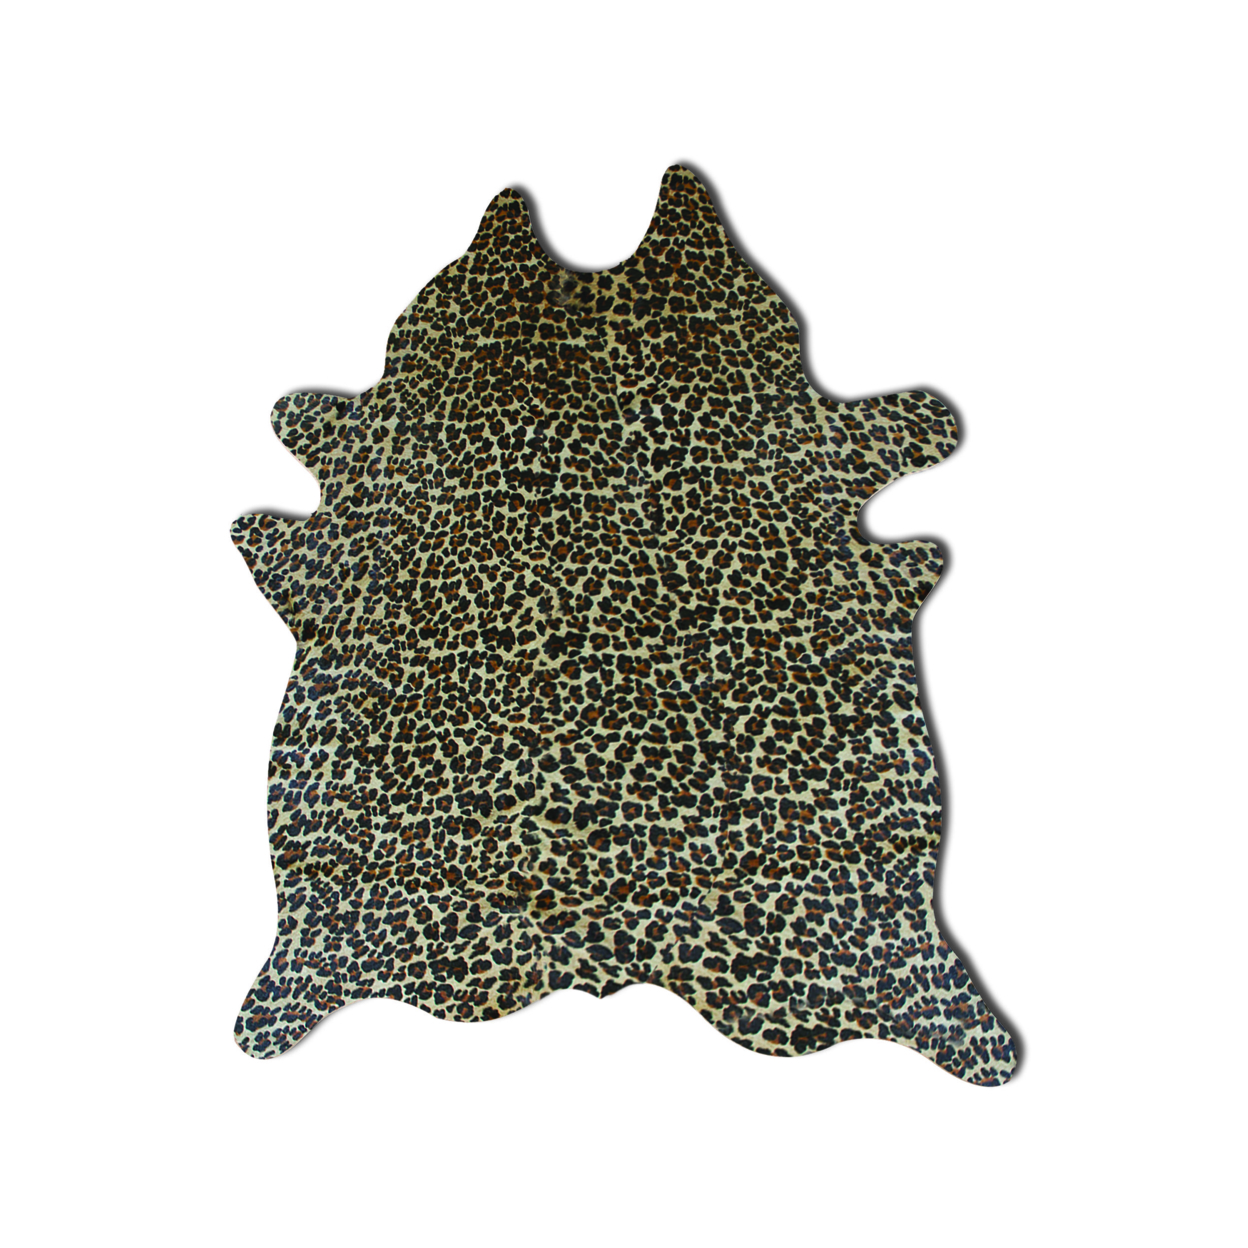 Togo Cowhide Rug Aprox 6'x7' Leopard